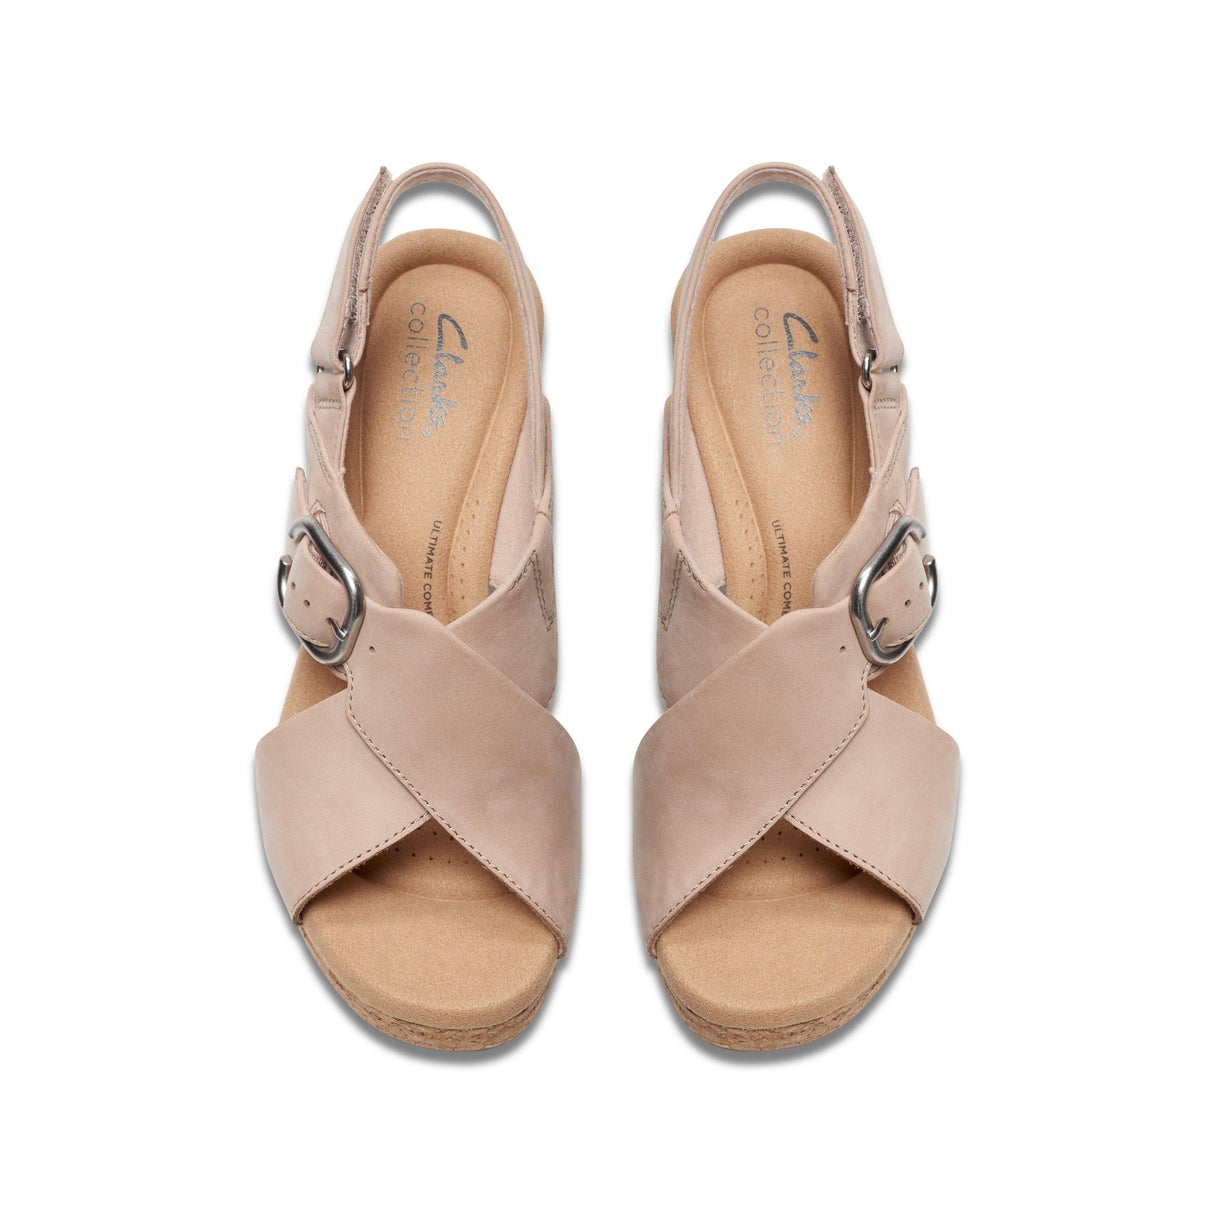 Clarks Women's Giselle Dove Sandals - A&M Clothing & Shoes